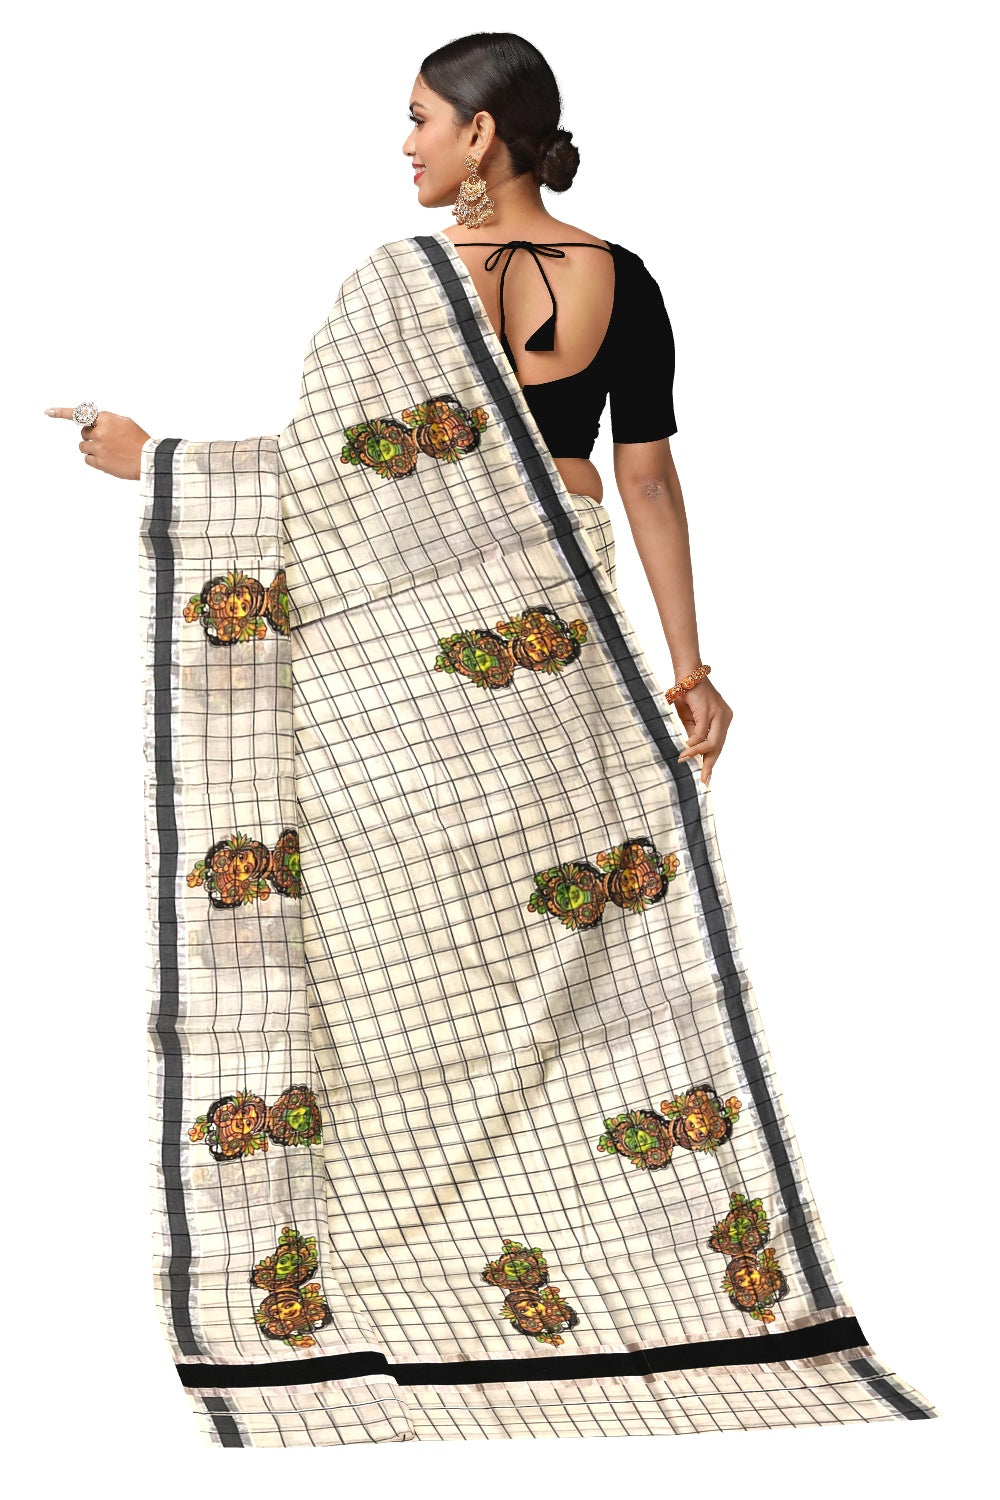 Pure Cotton Black Check Design Kerala Saree with Krishna Radha Mural Prints and Silver Border